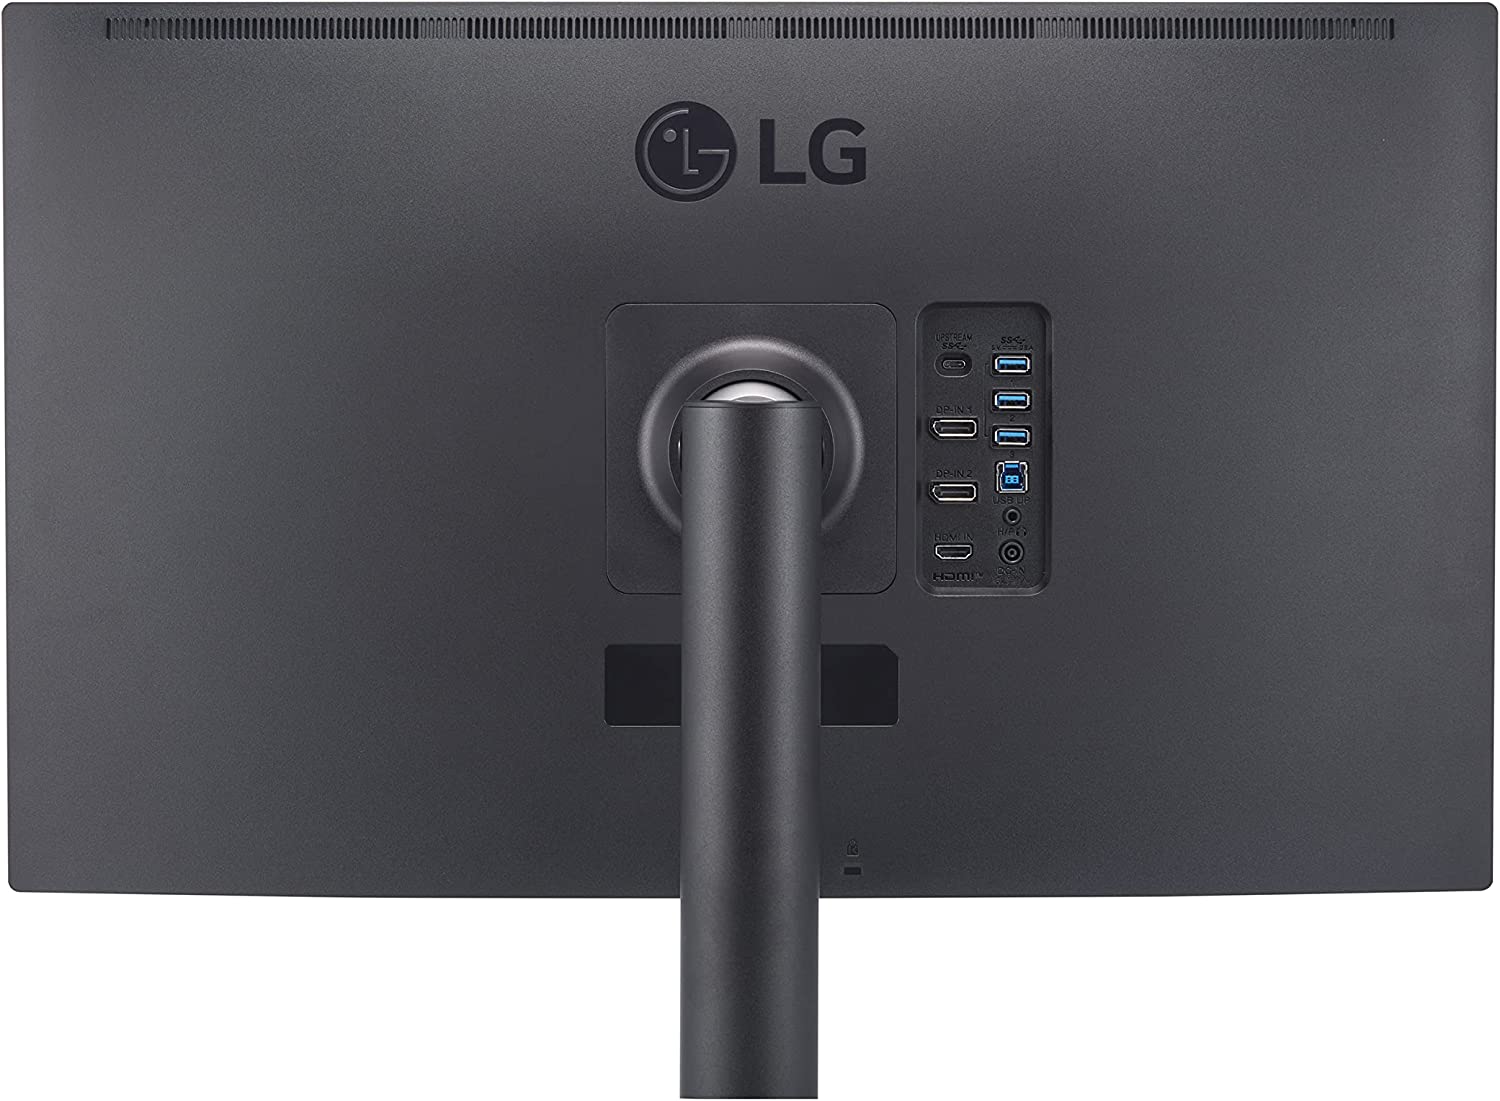 LG 27EP950-B 27” Ultrafine UHD (3840 x 2160) OLED Pro Display with Adobe RBG / DCI-P3 99%, VESA Display HDR 400 True Black, 1M:1 Contrast Ratio and Tilt/Height/Pivot Adjustable Stand - Black